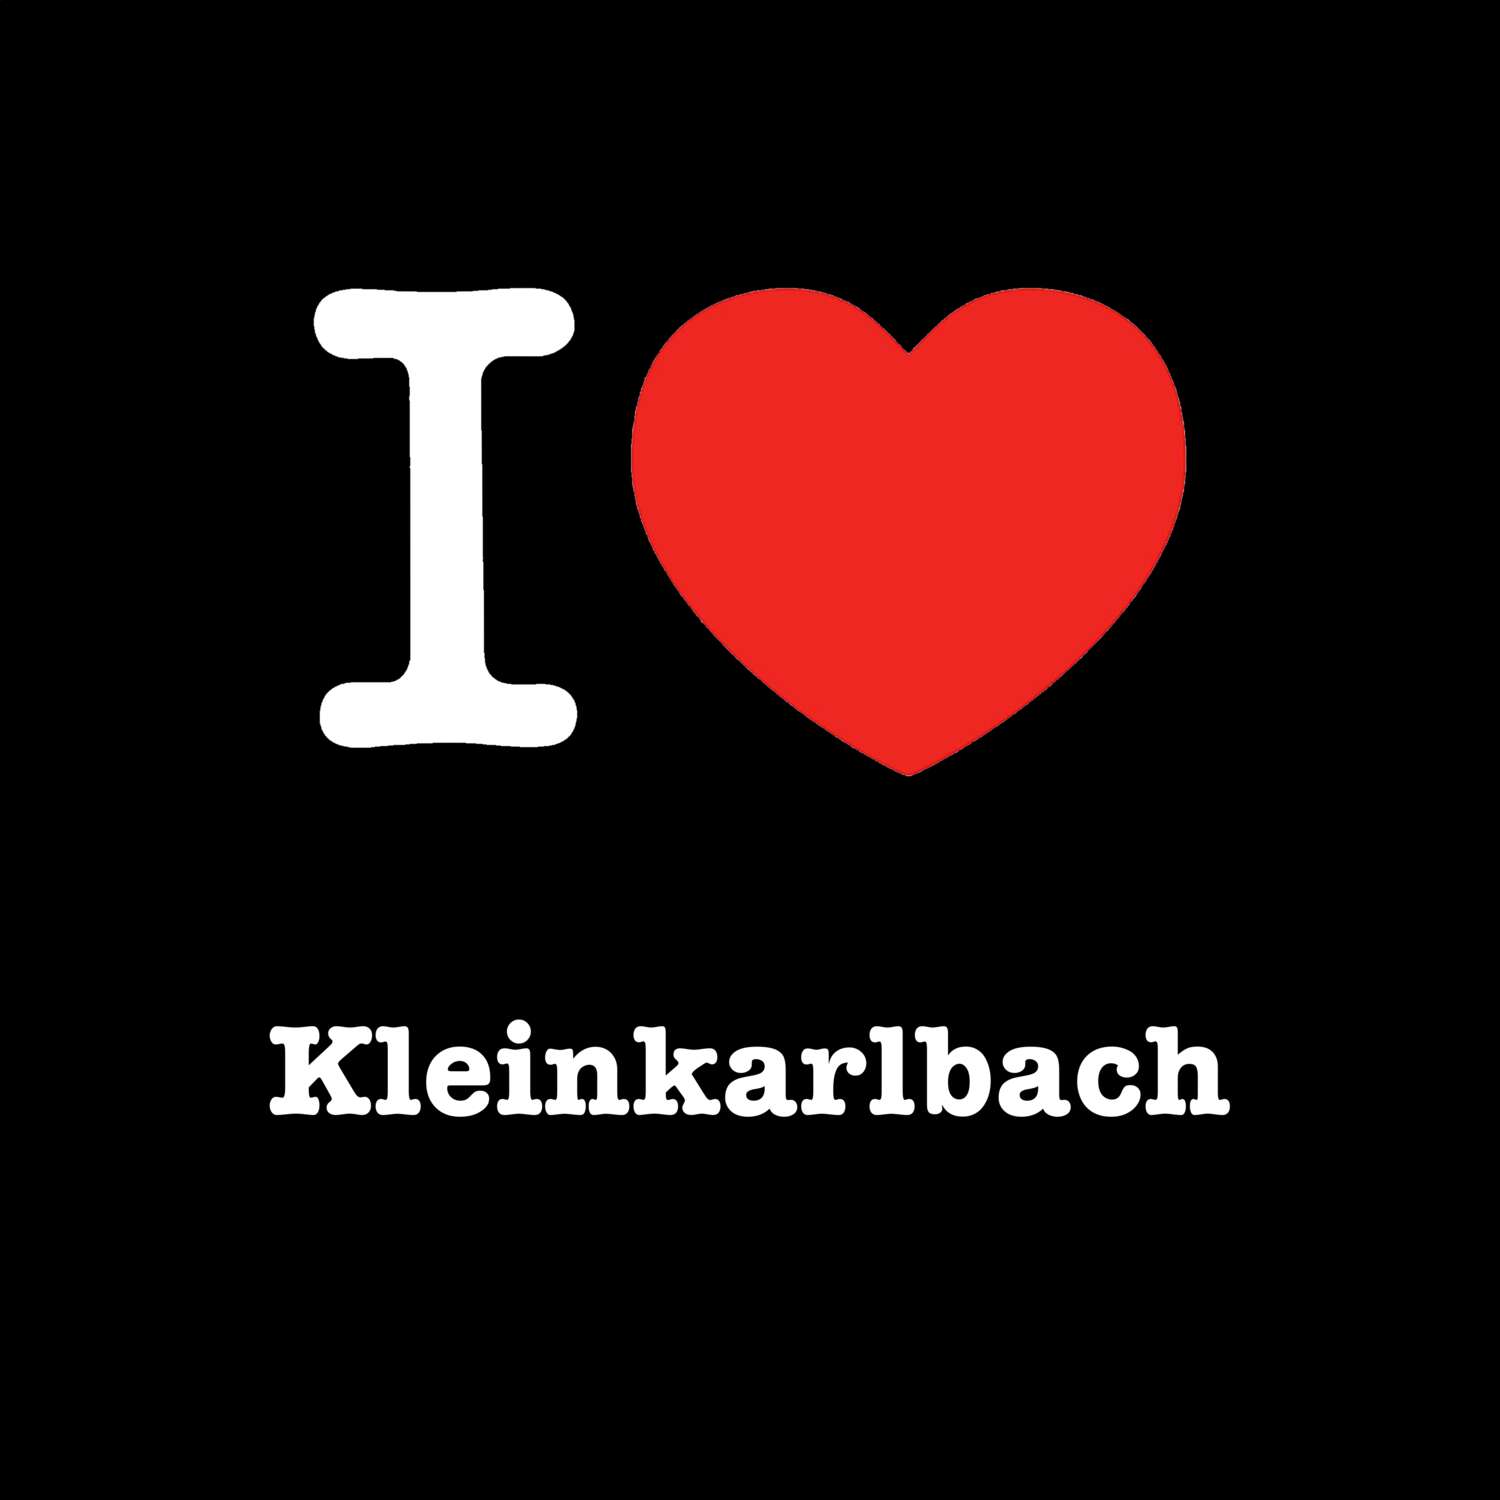 Kleinkarlbach T-Shirt »I love«